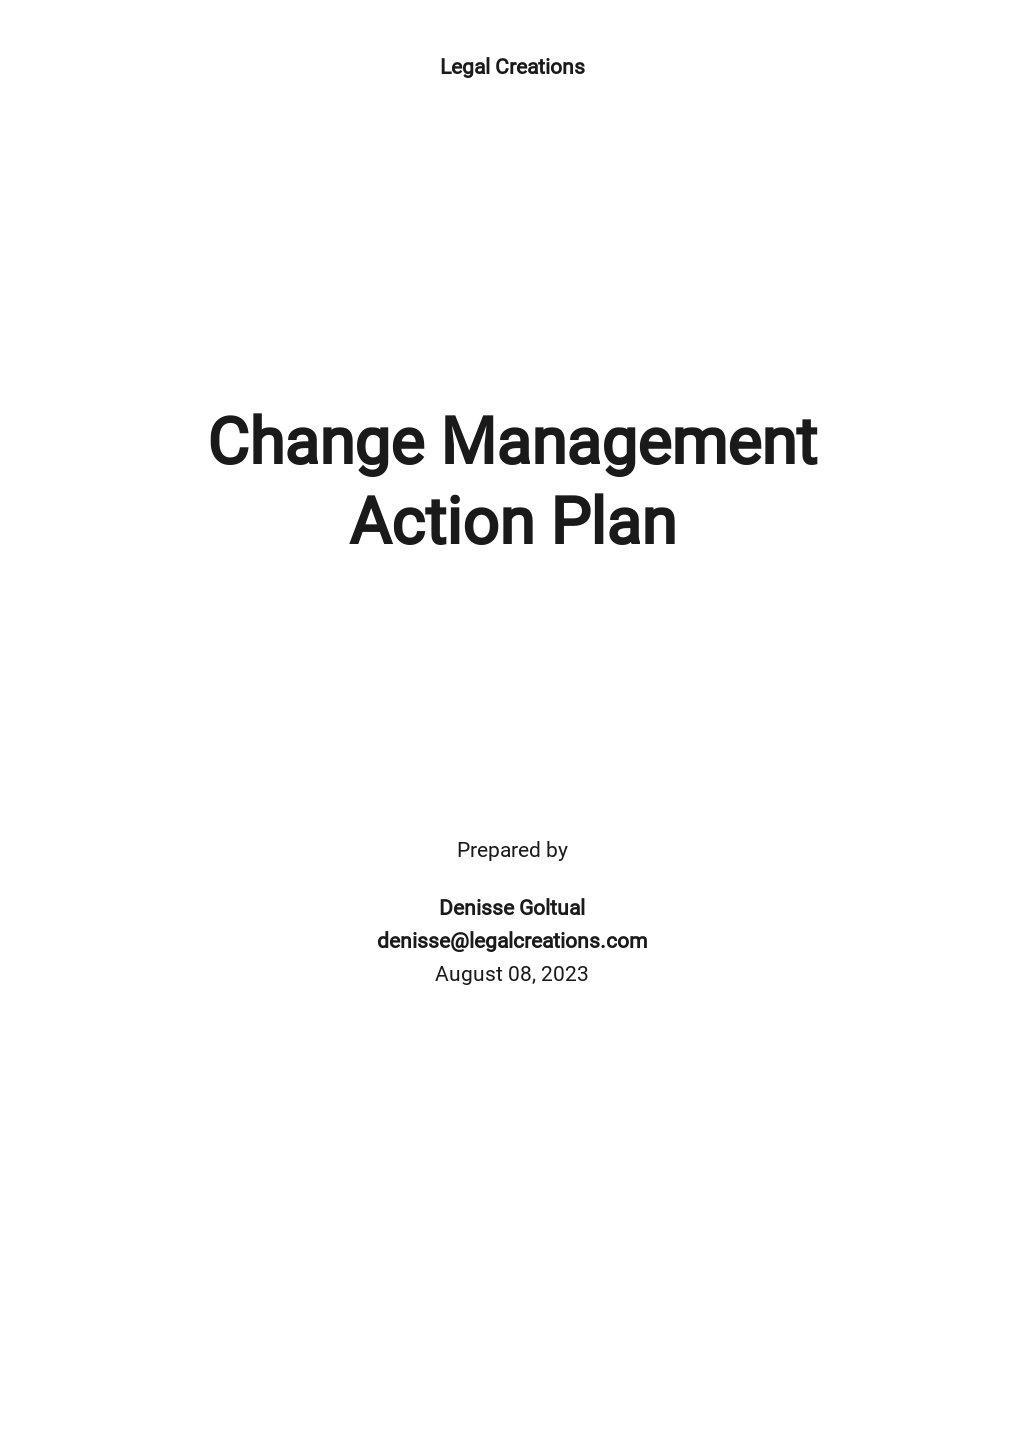 Change Management Action Plan Template